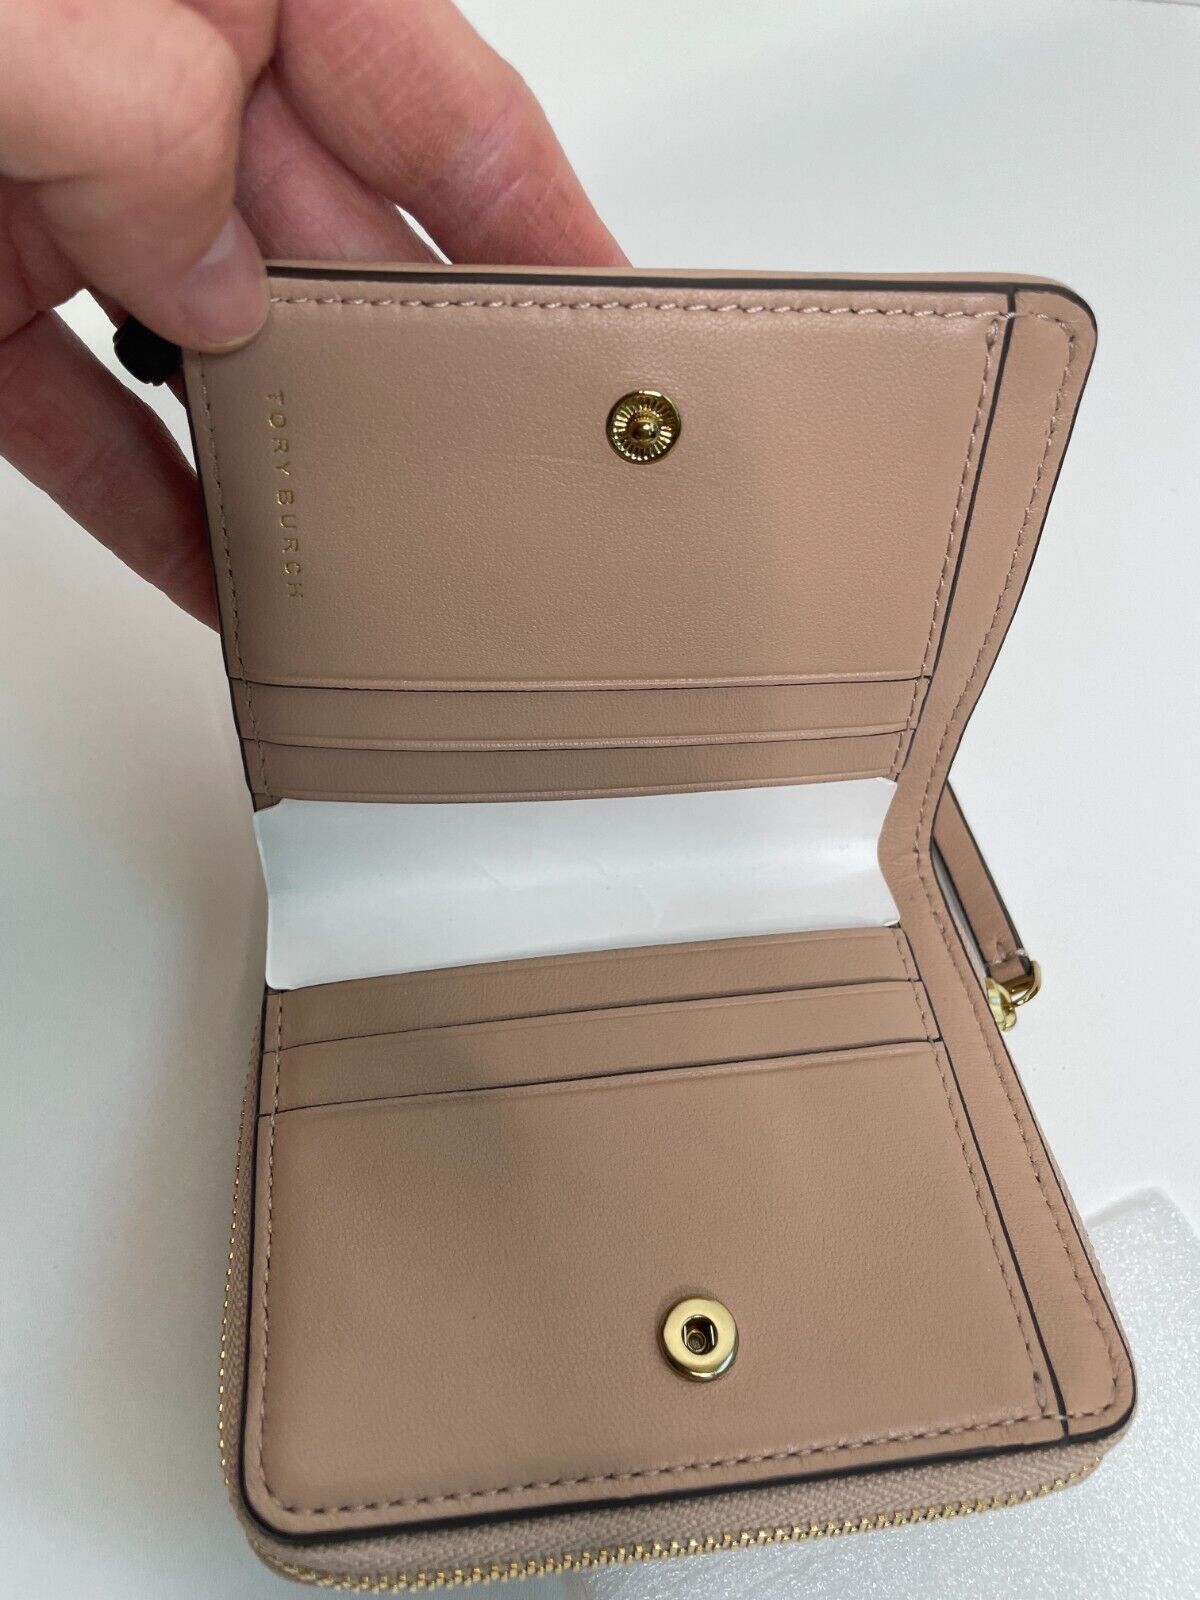 Tory Burch Kira Chevron Bi-Fold Wallet Devon Sand Quilted Leather One Size 56820